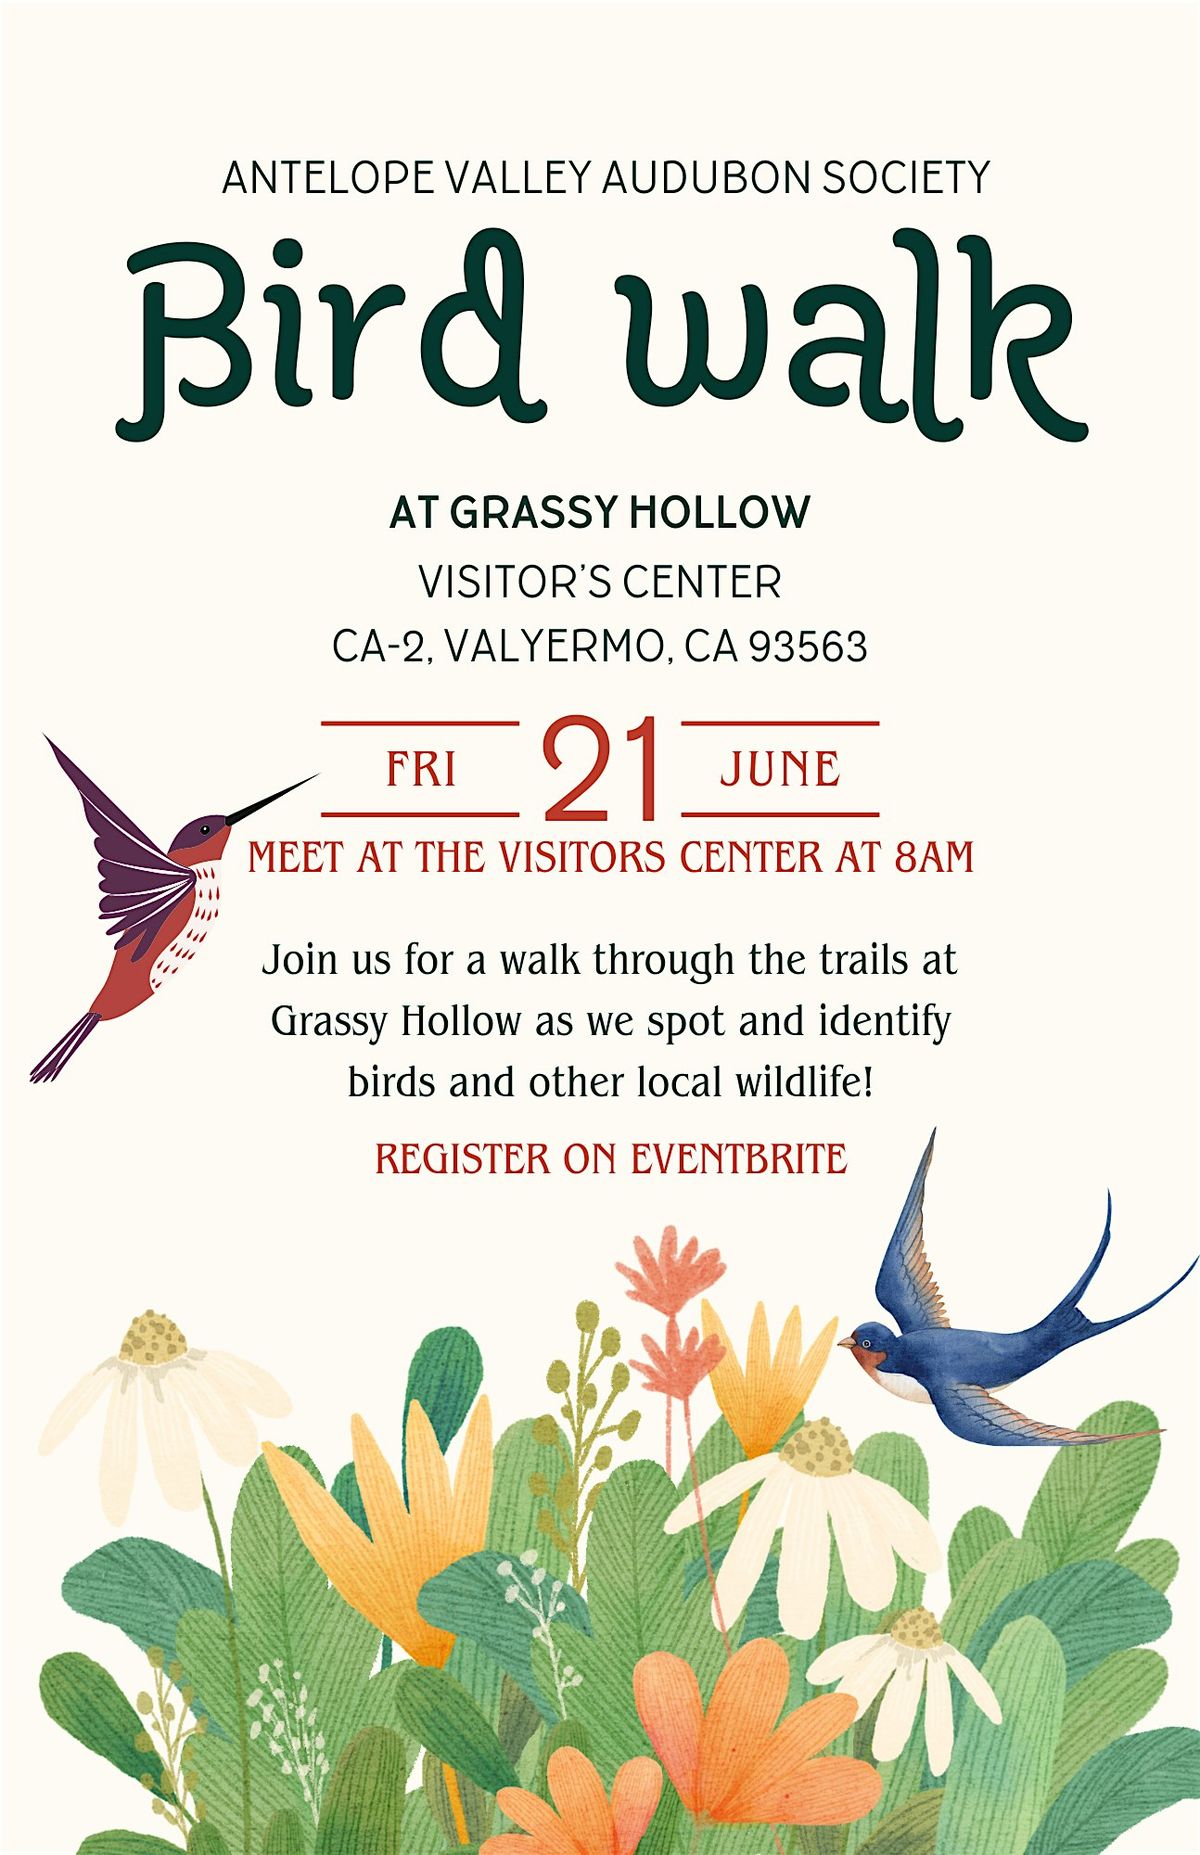 Bird Walk at Grassy Hollow